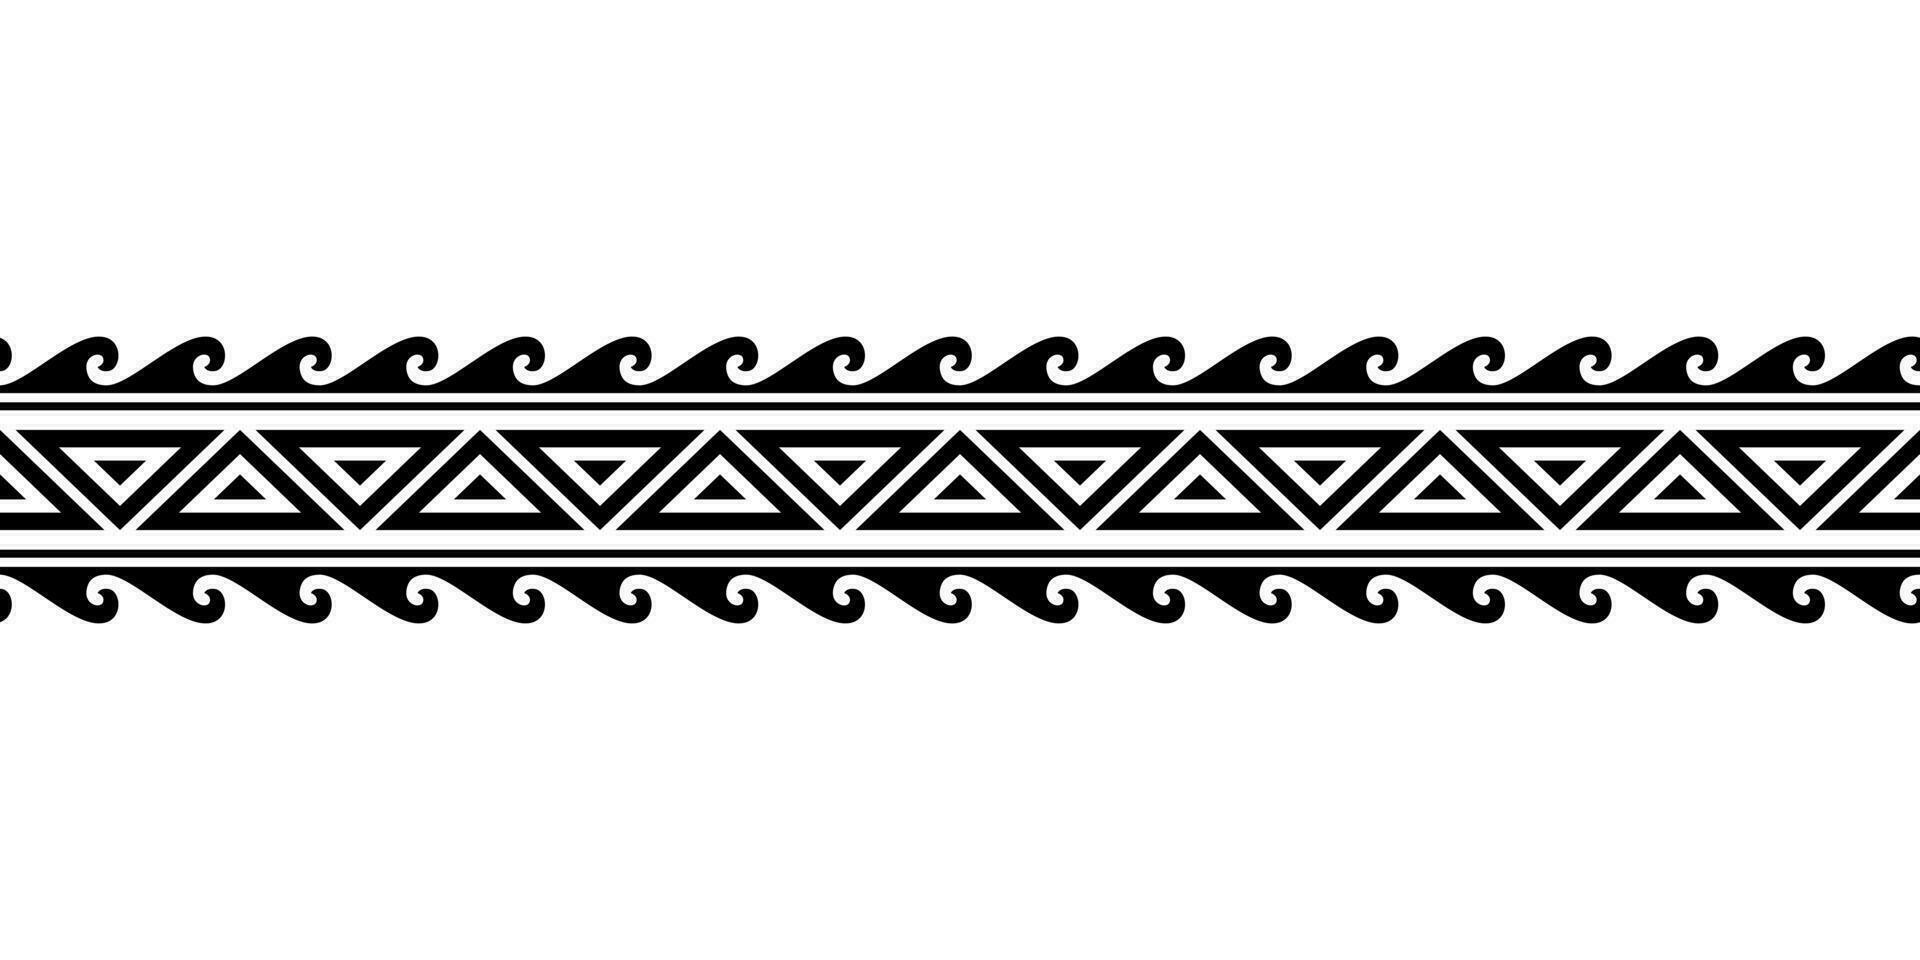 maorí polinesio tatuaje pulsera con ondas. tribal manga sin costura modelo vector. vector